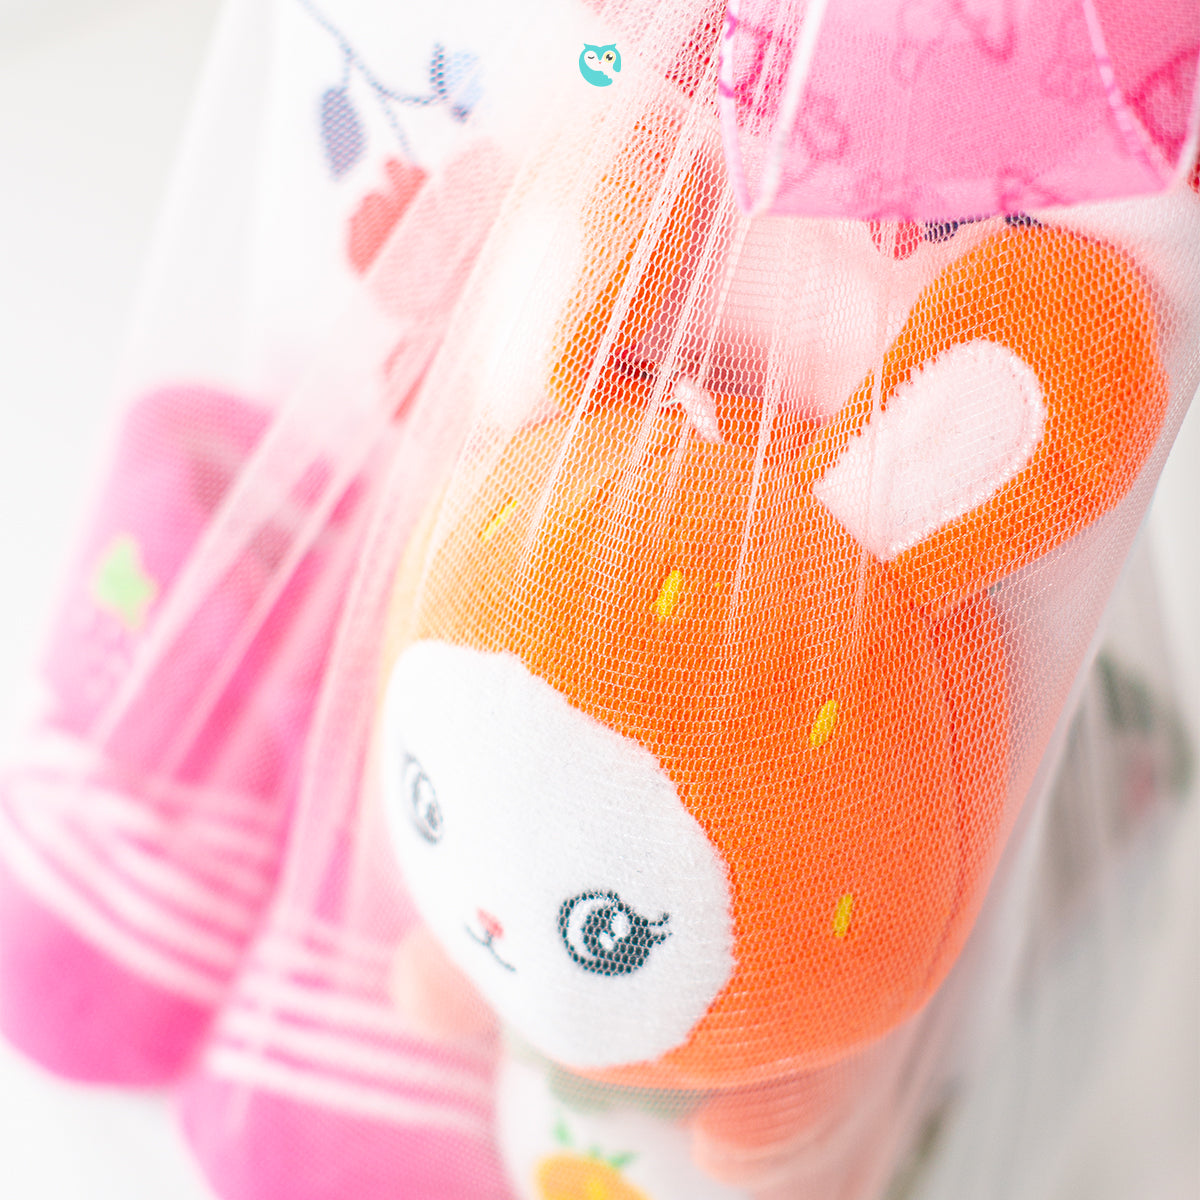 MELLOW Girl Classic Gift set - 6 items (Assorted Pink) | Isetan KL Online Store